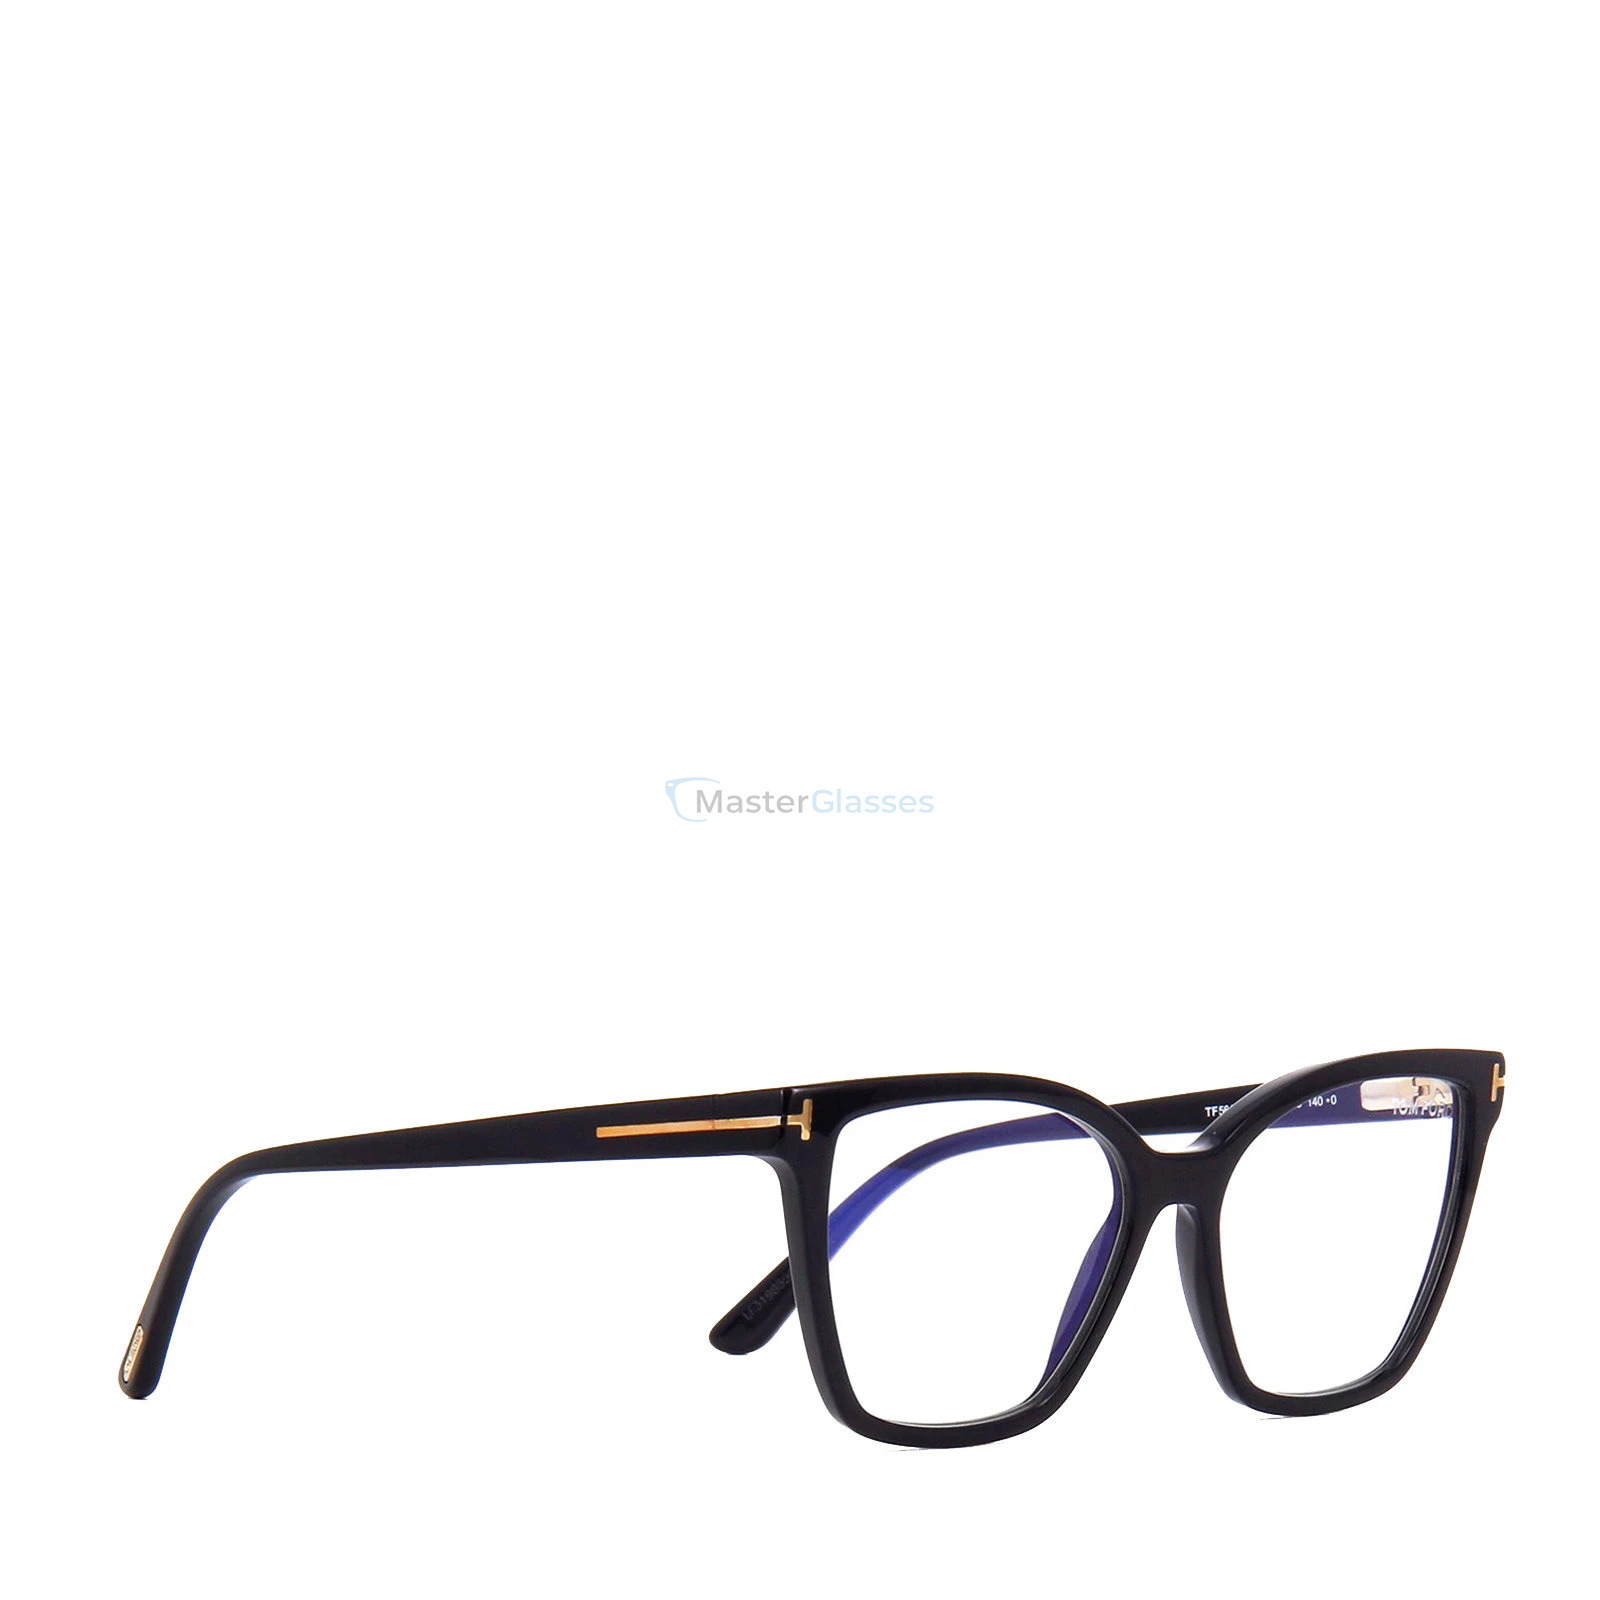 Оправа Tom Ford TF 5643-B 001 55 - купить в оптике MasterGlasses